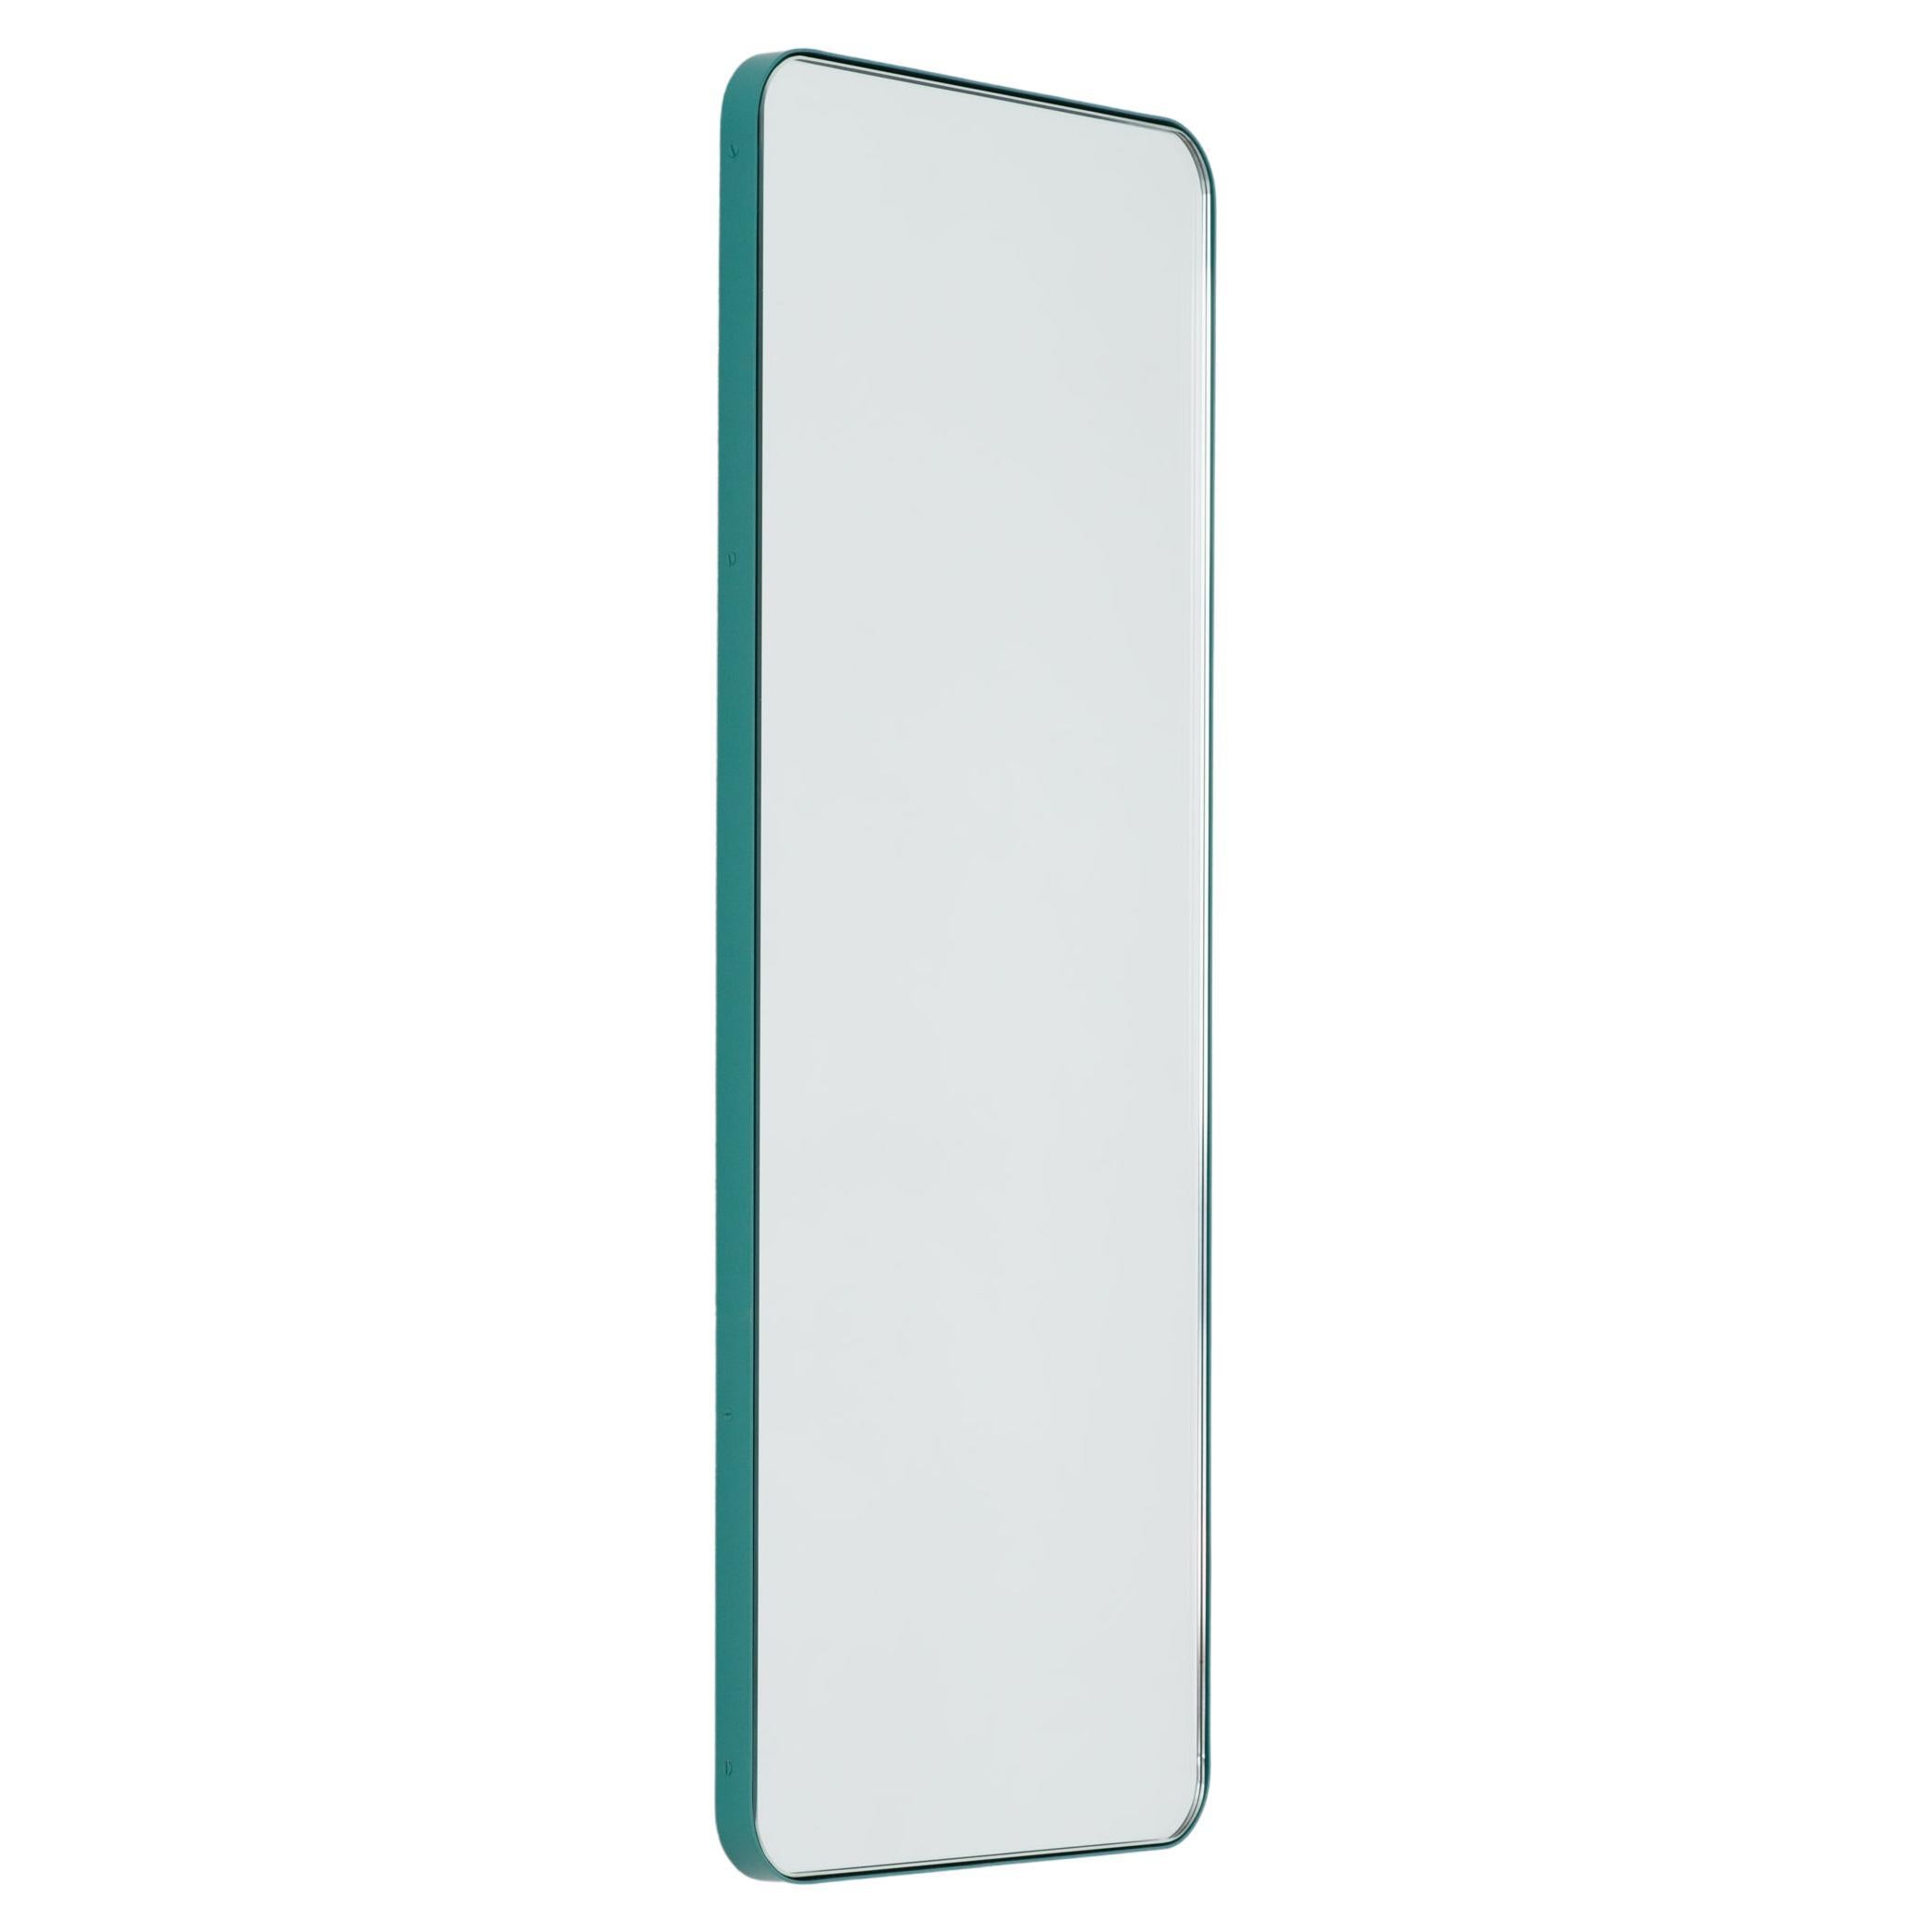 Quadris Rectangular Modern Customisable Mirror with Mint Turquoise Frame, Medium For Sale